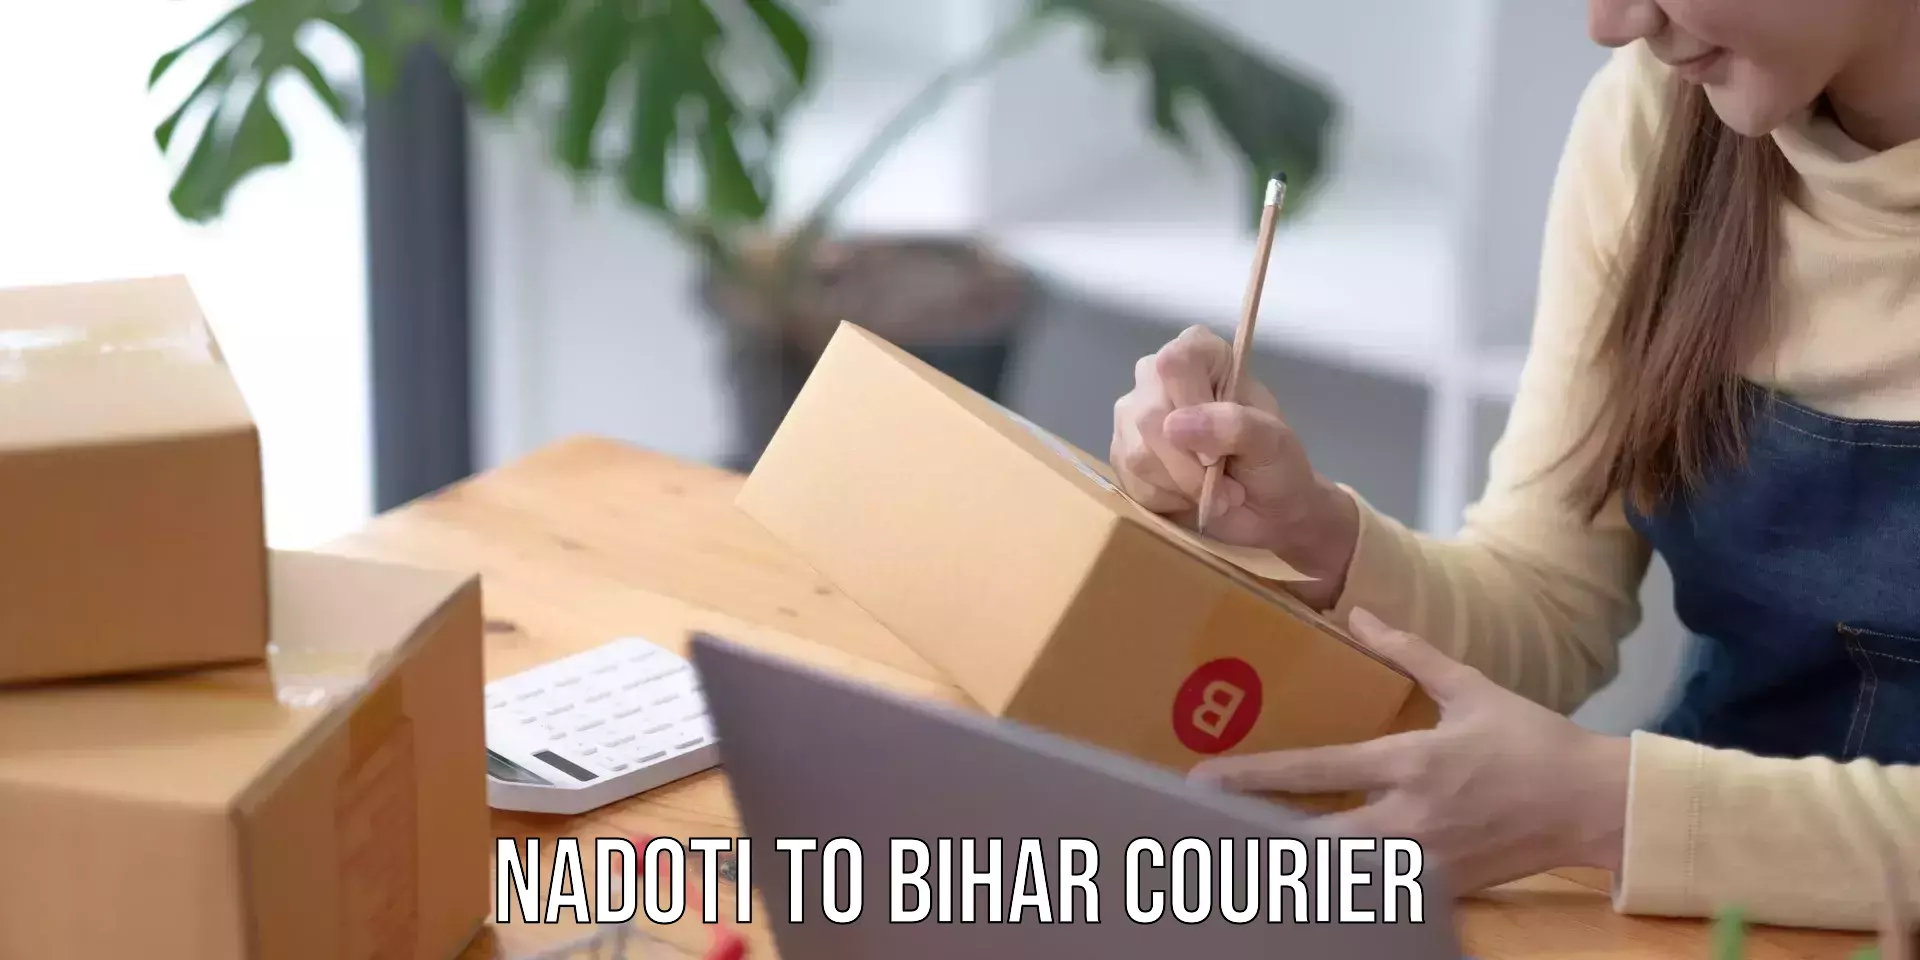 Courier service partnerships Nadoti to Bihar